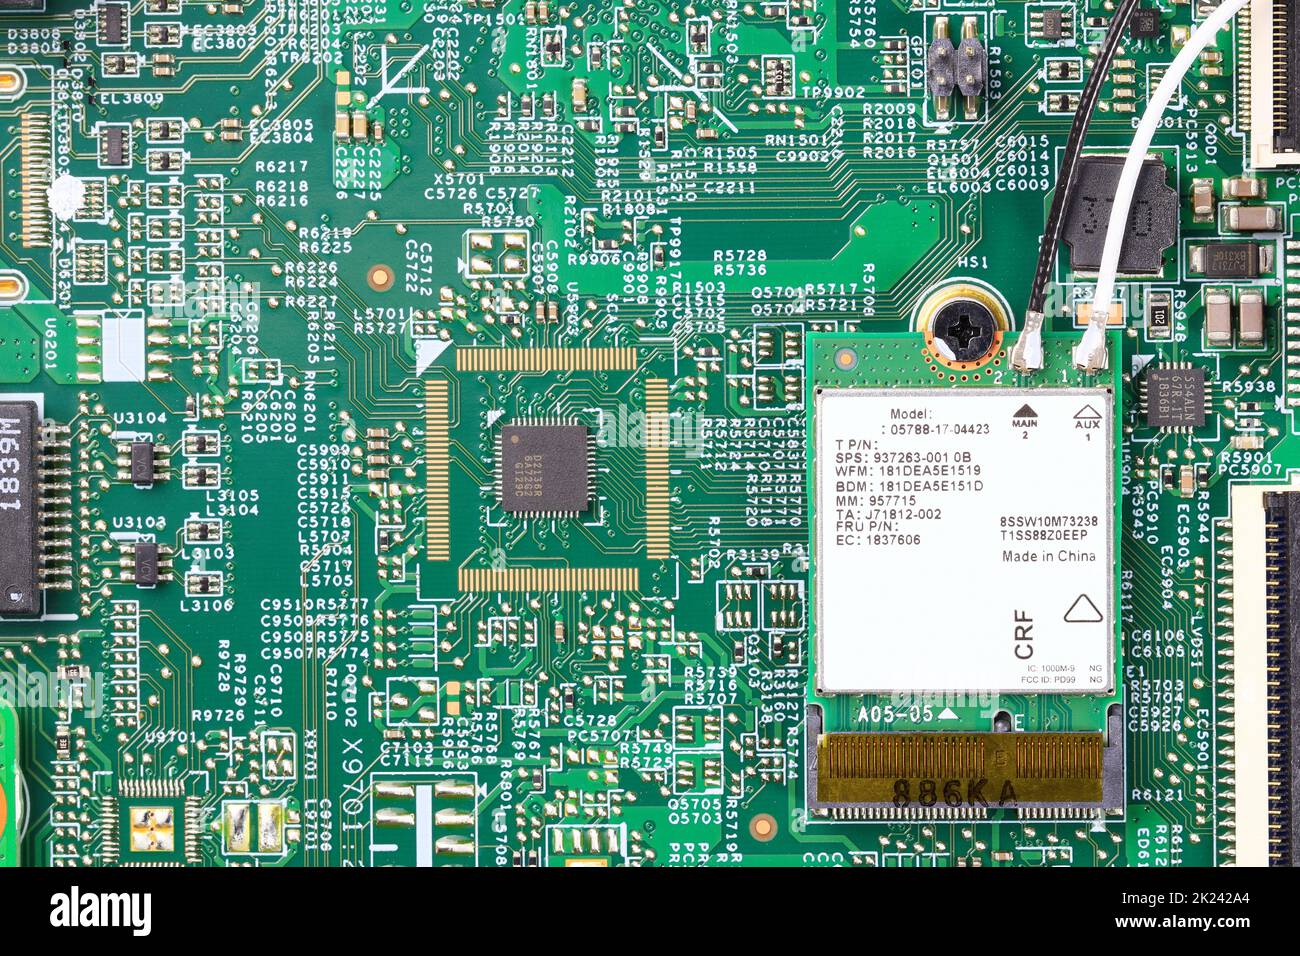 Mini pci wireless network adapter or wireless Mini PCI Express Card on computer circuit board near installed microprocessor. Stock Photo